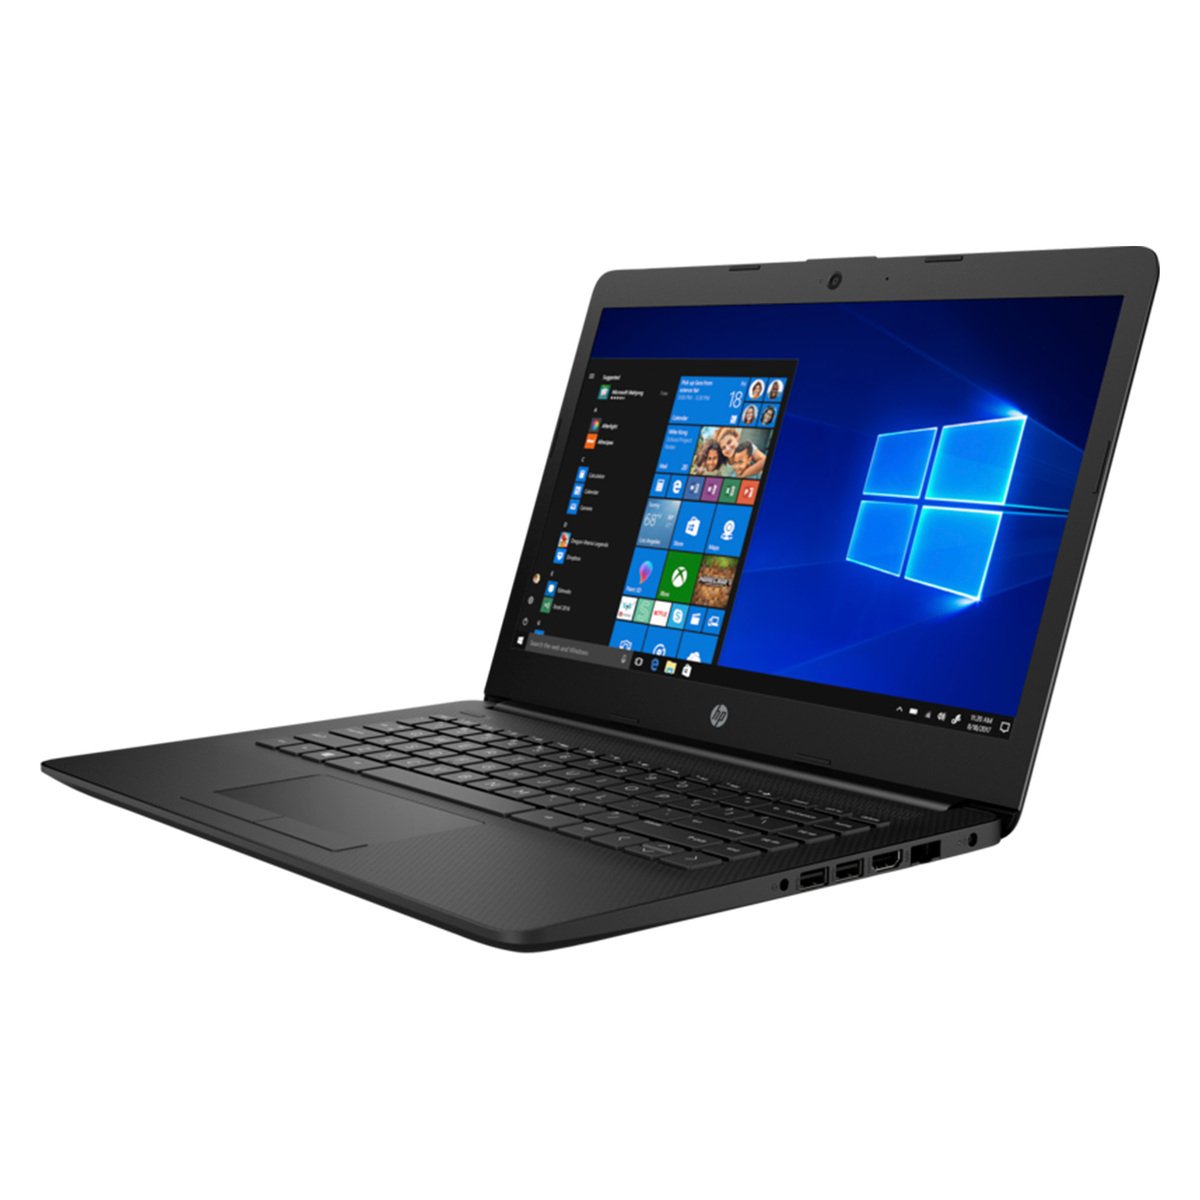 HP Notebook 15-DW3008NX Intel Core i7, 8GB RAM, 1TB HDD, 15.6 inch, 2GB NVIDIA GeForce MX450, Windows 10, Black